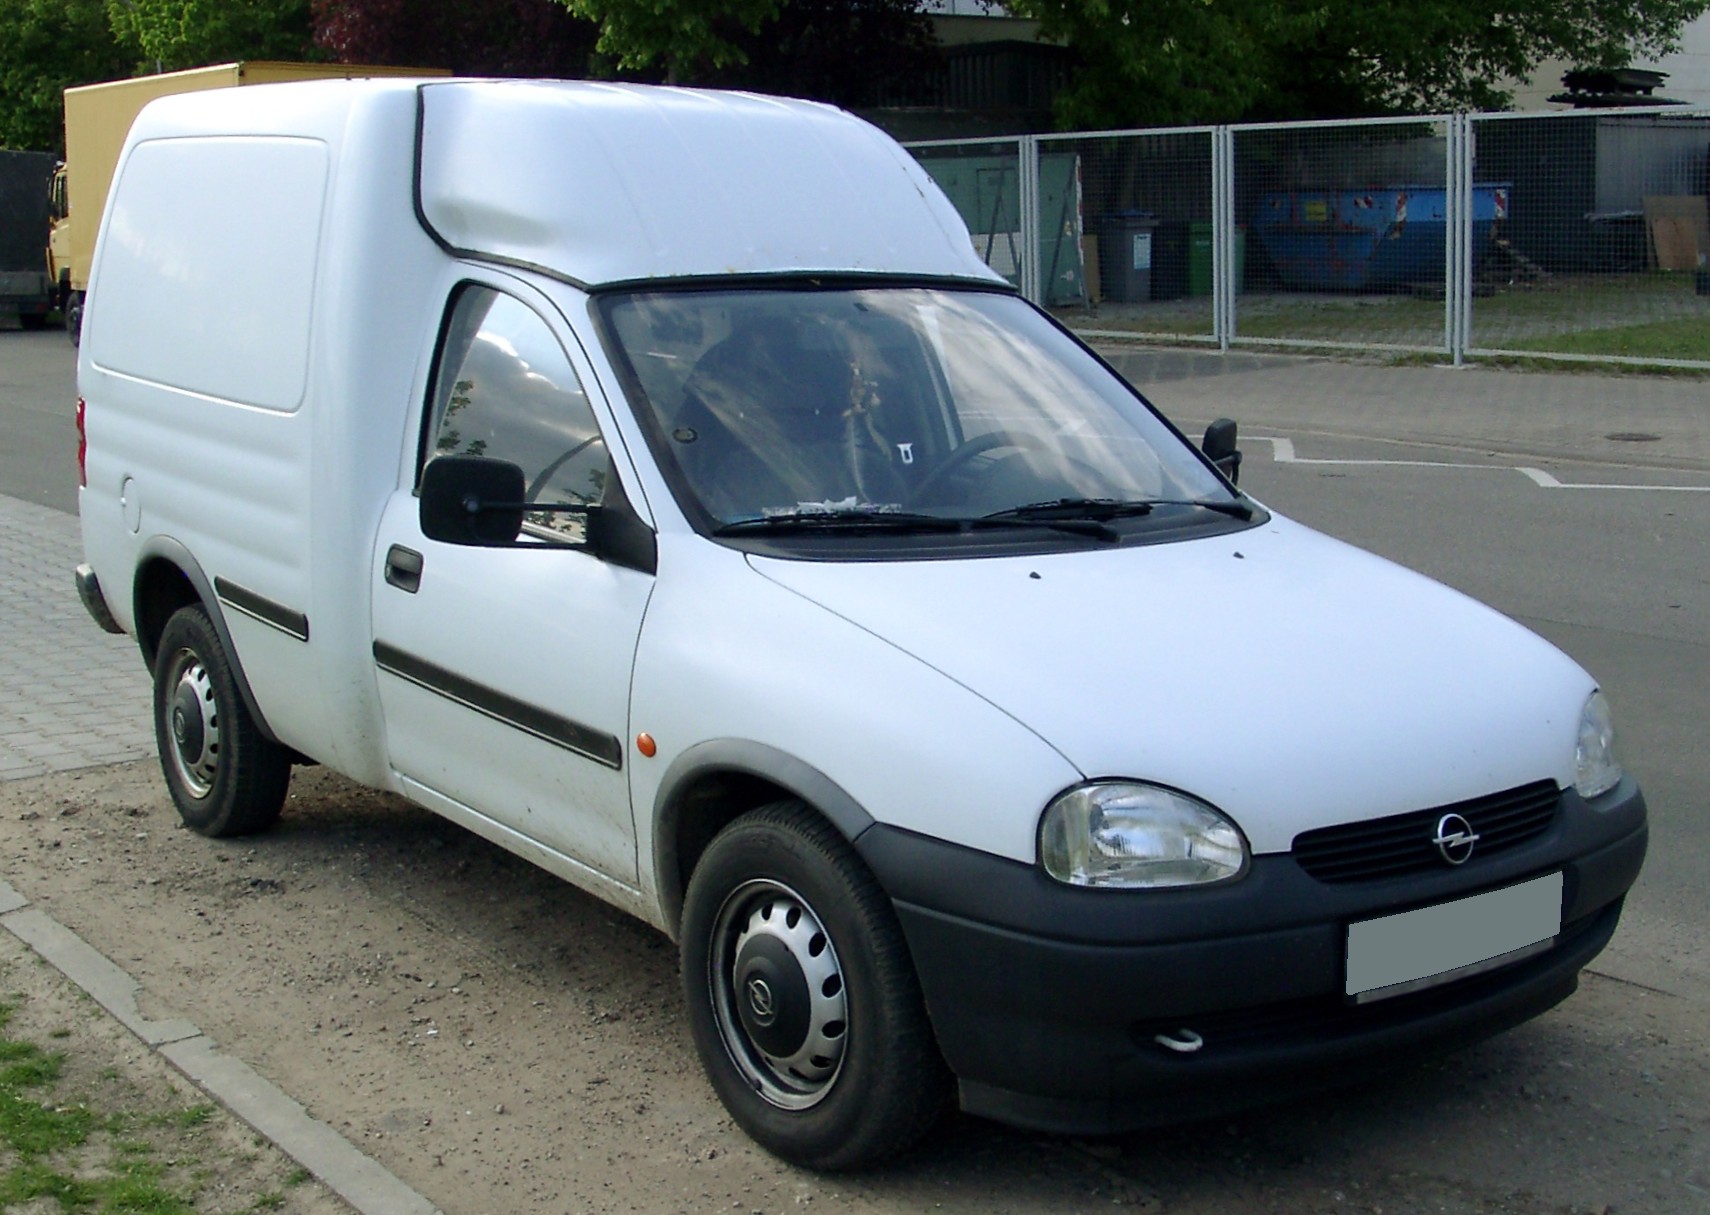 File:Opel Combo front 20080625.jpg - Wikimedia Commons